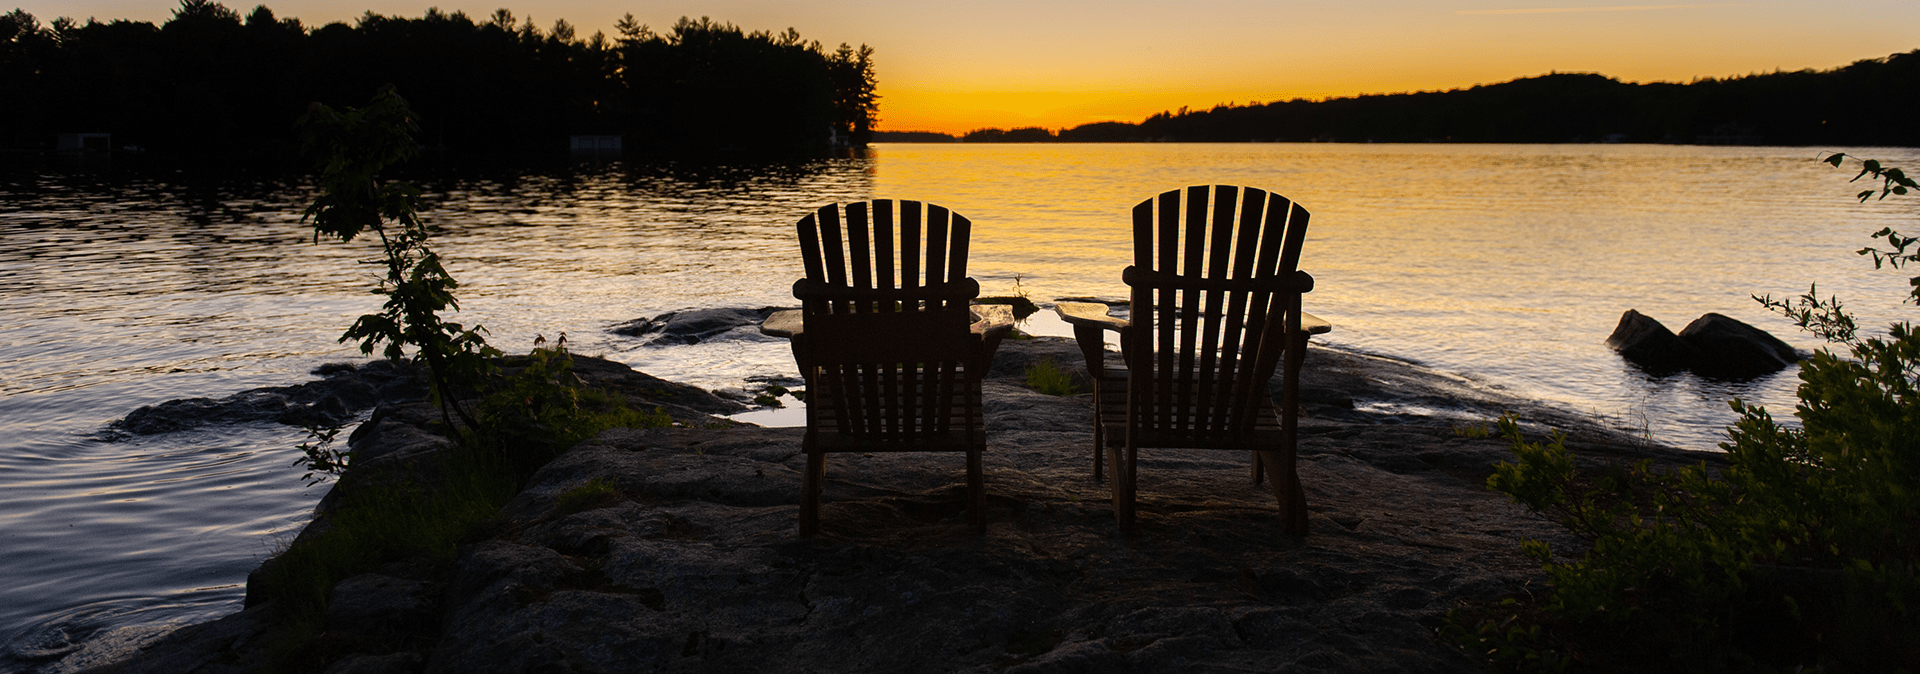 Adirondack chairs on a rock facing a lake at sunset